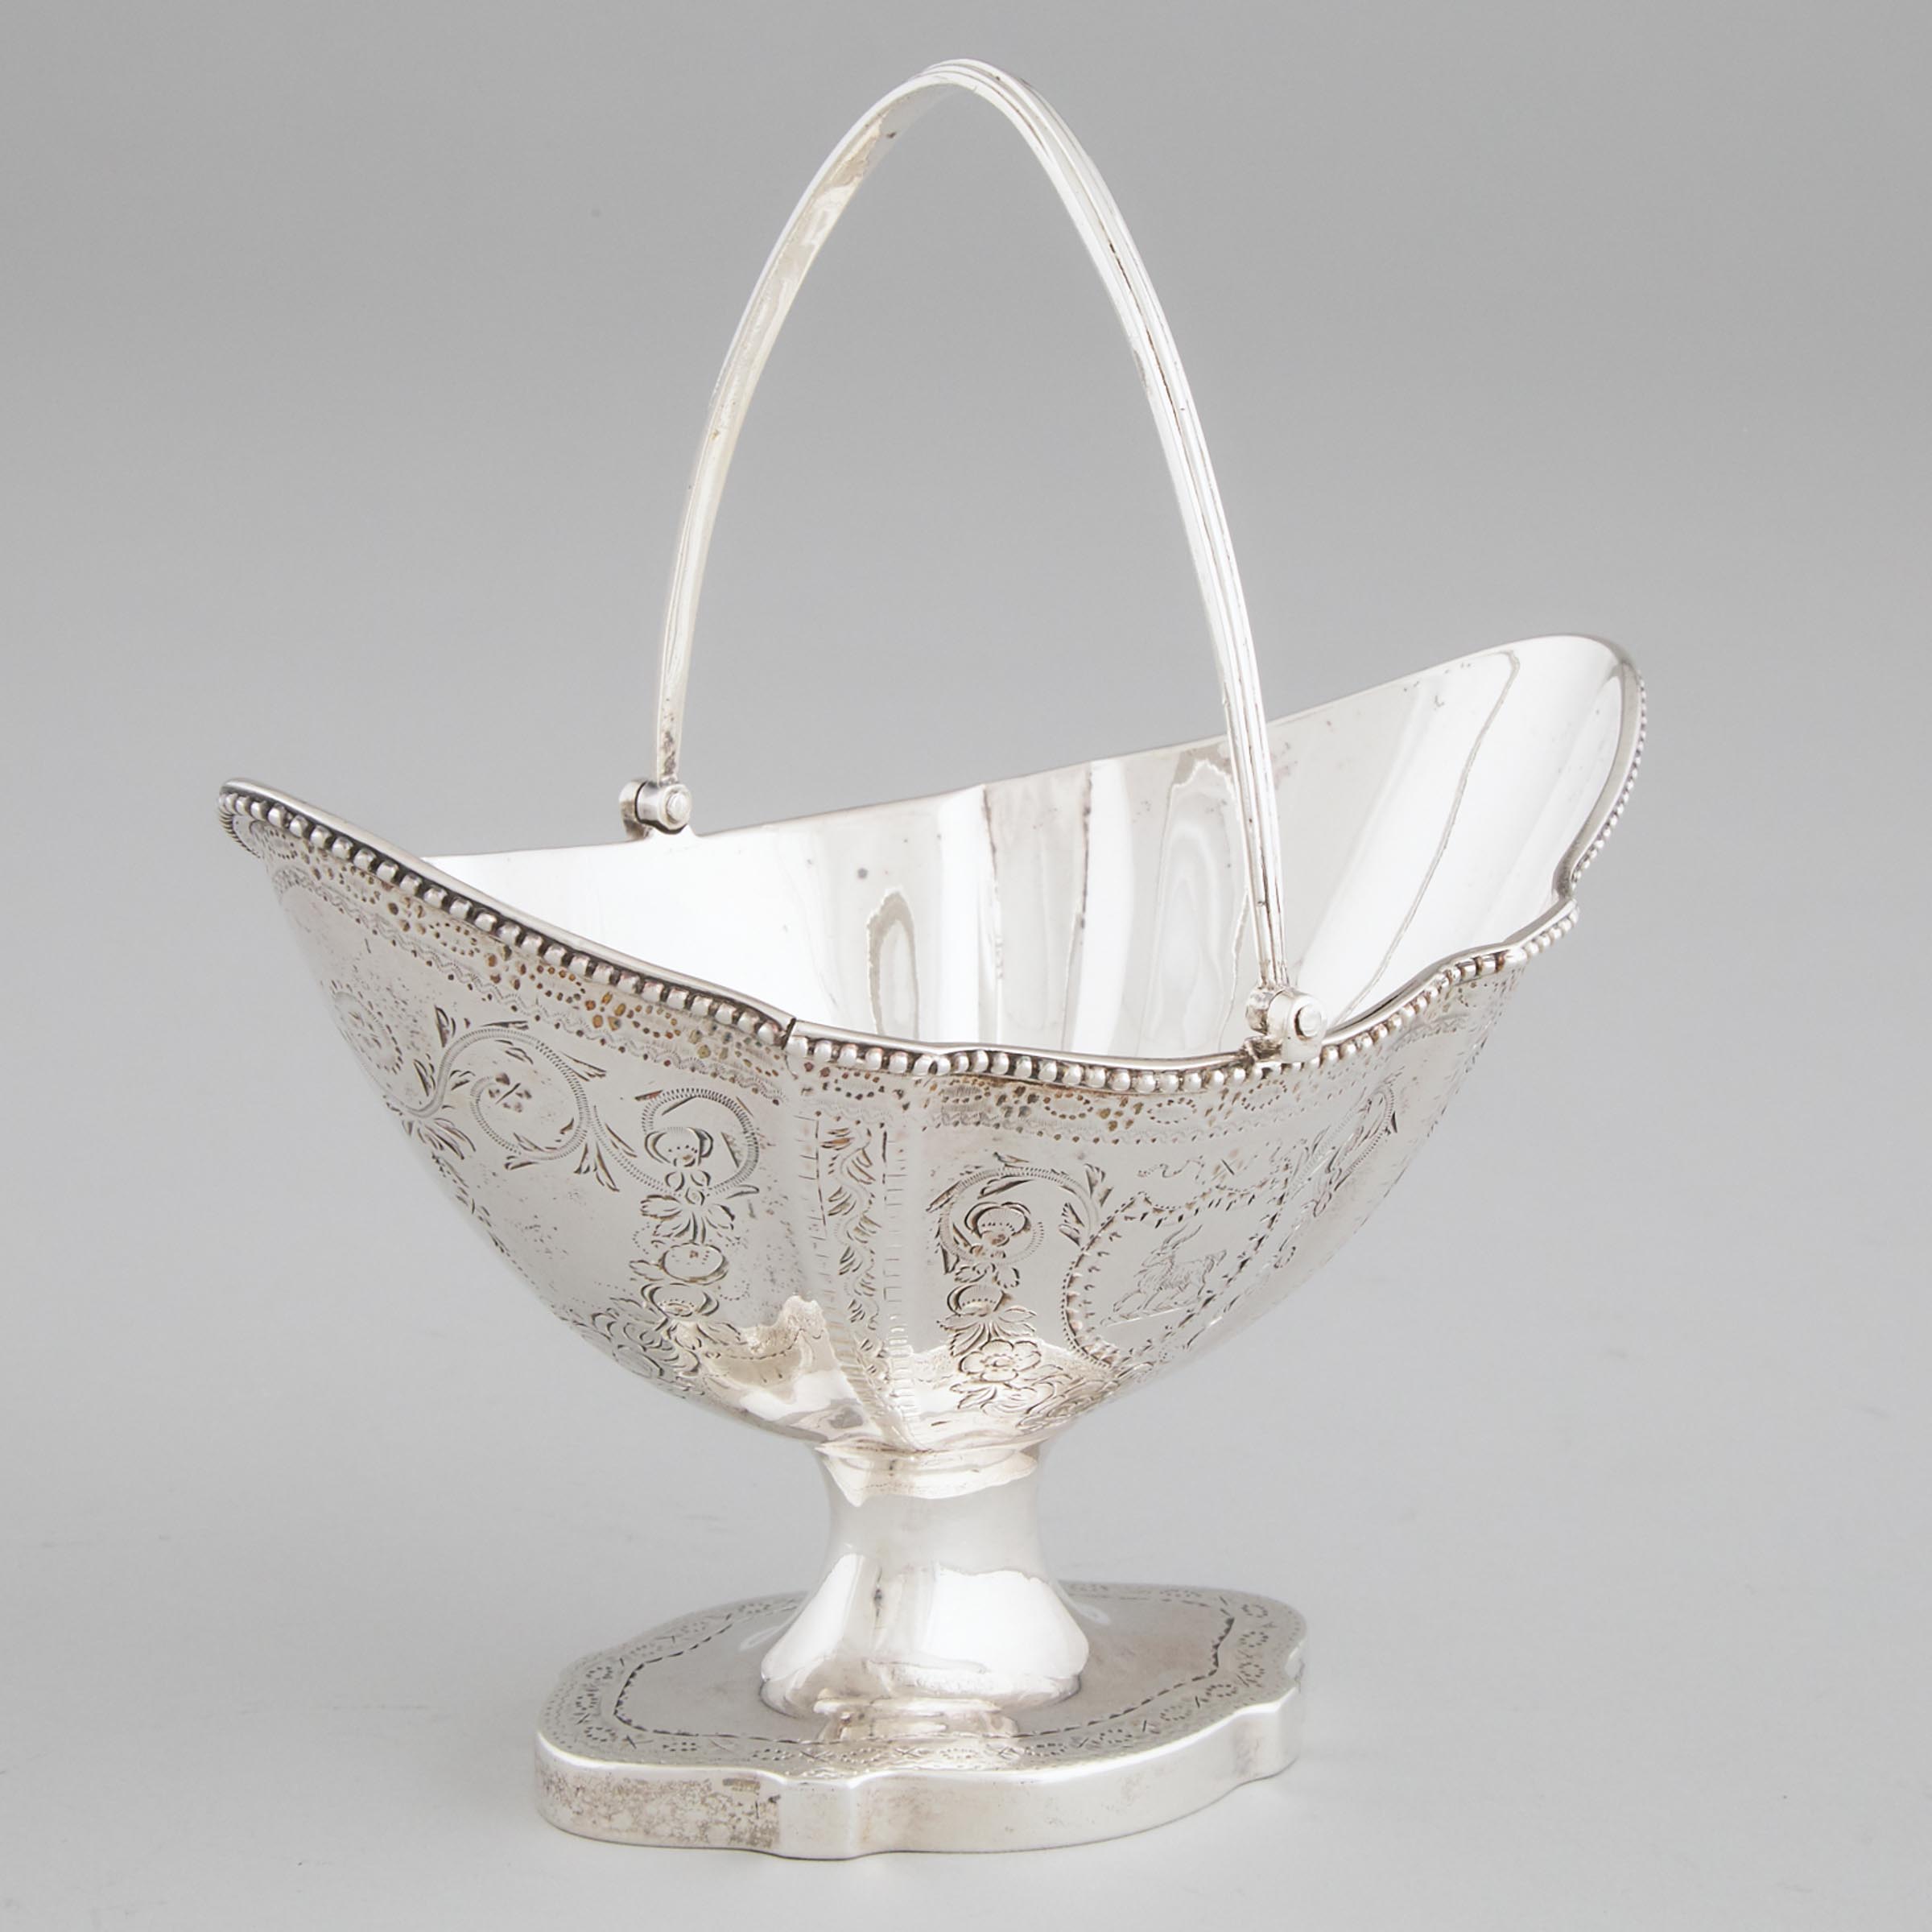 George III Silver Bright-Cut Shaped Oval Sugar Basket, Henry Chawner, London, 1786